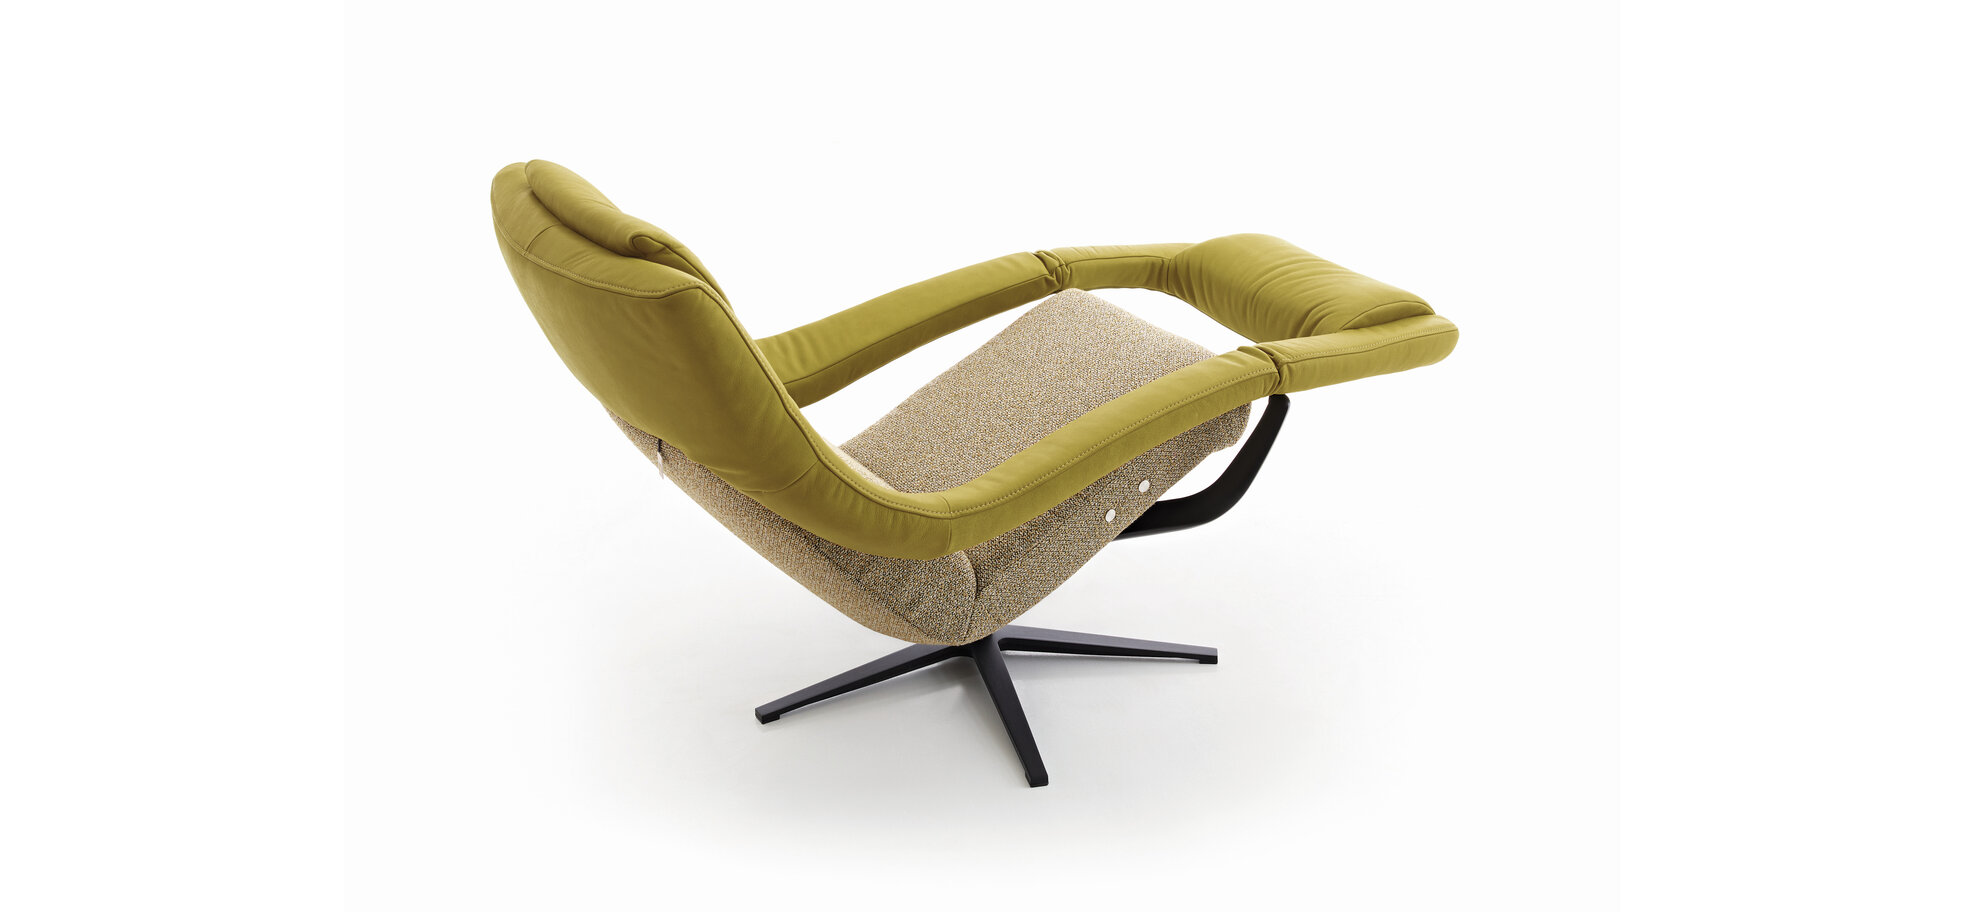 Sessel – Relaxfunktion motorisch, Stoff/Leder, Gelb/Grün